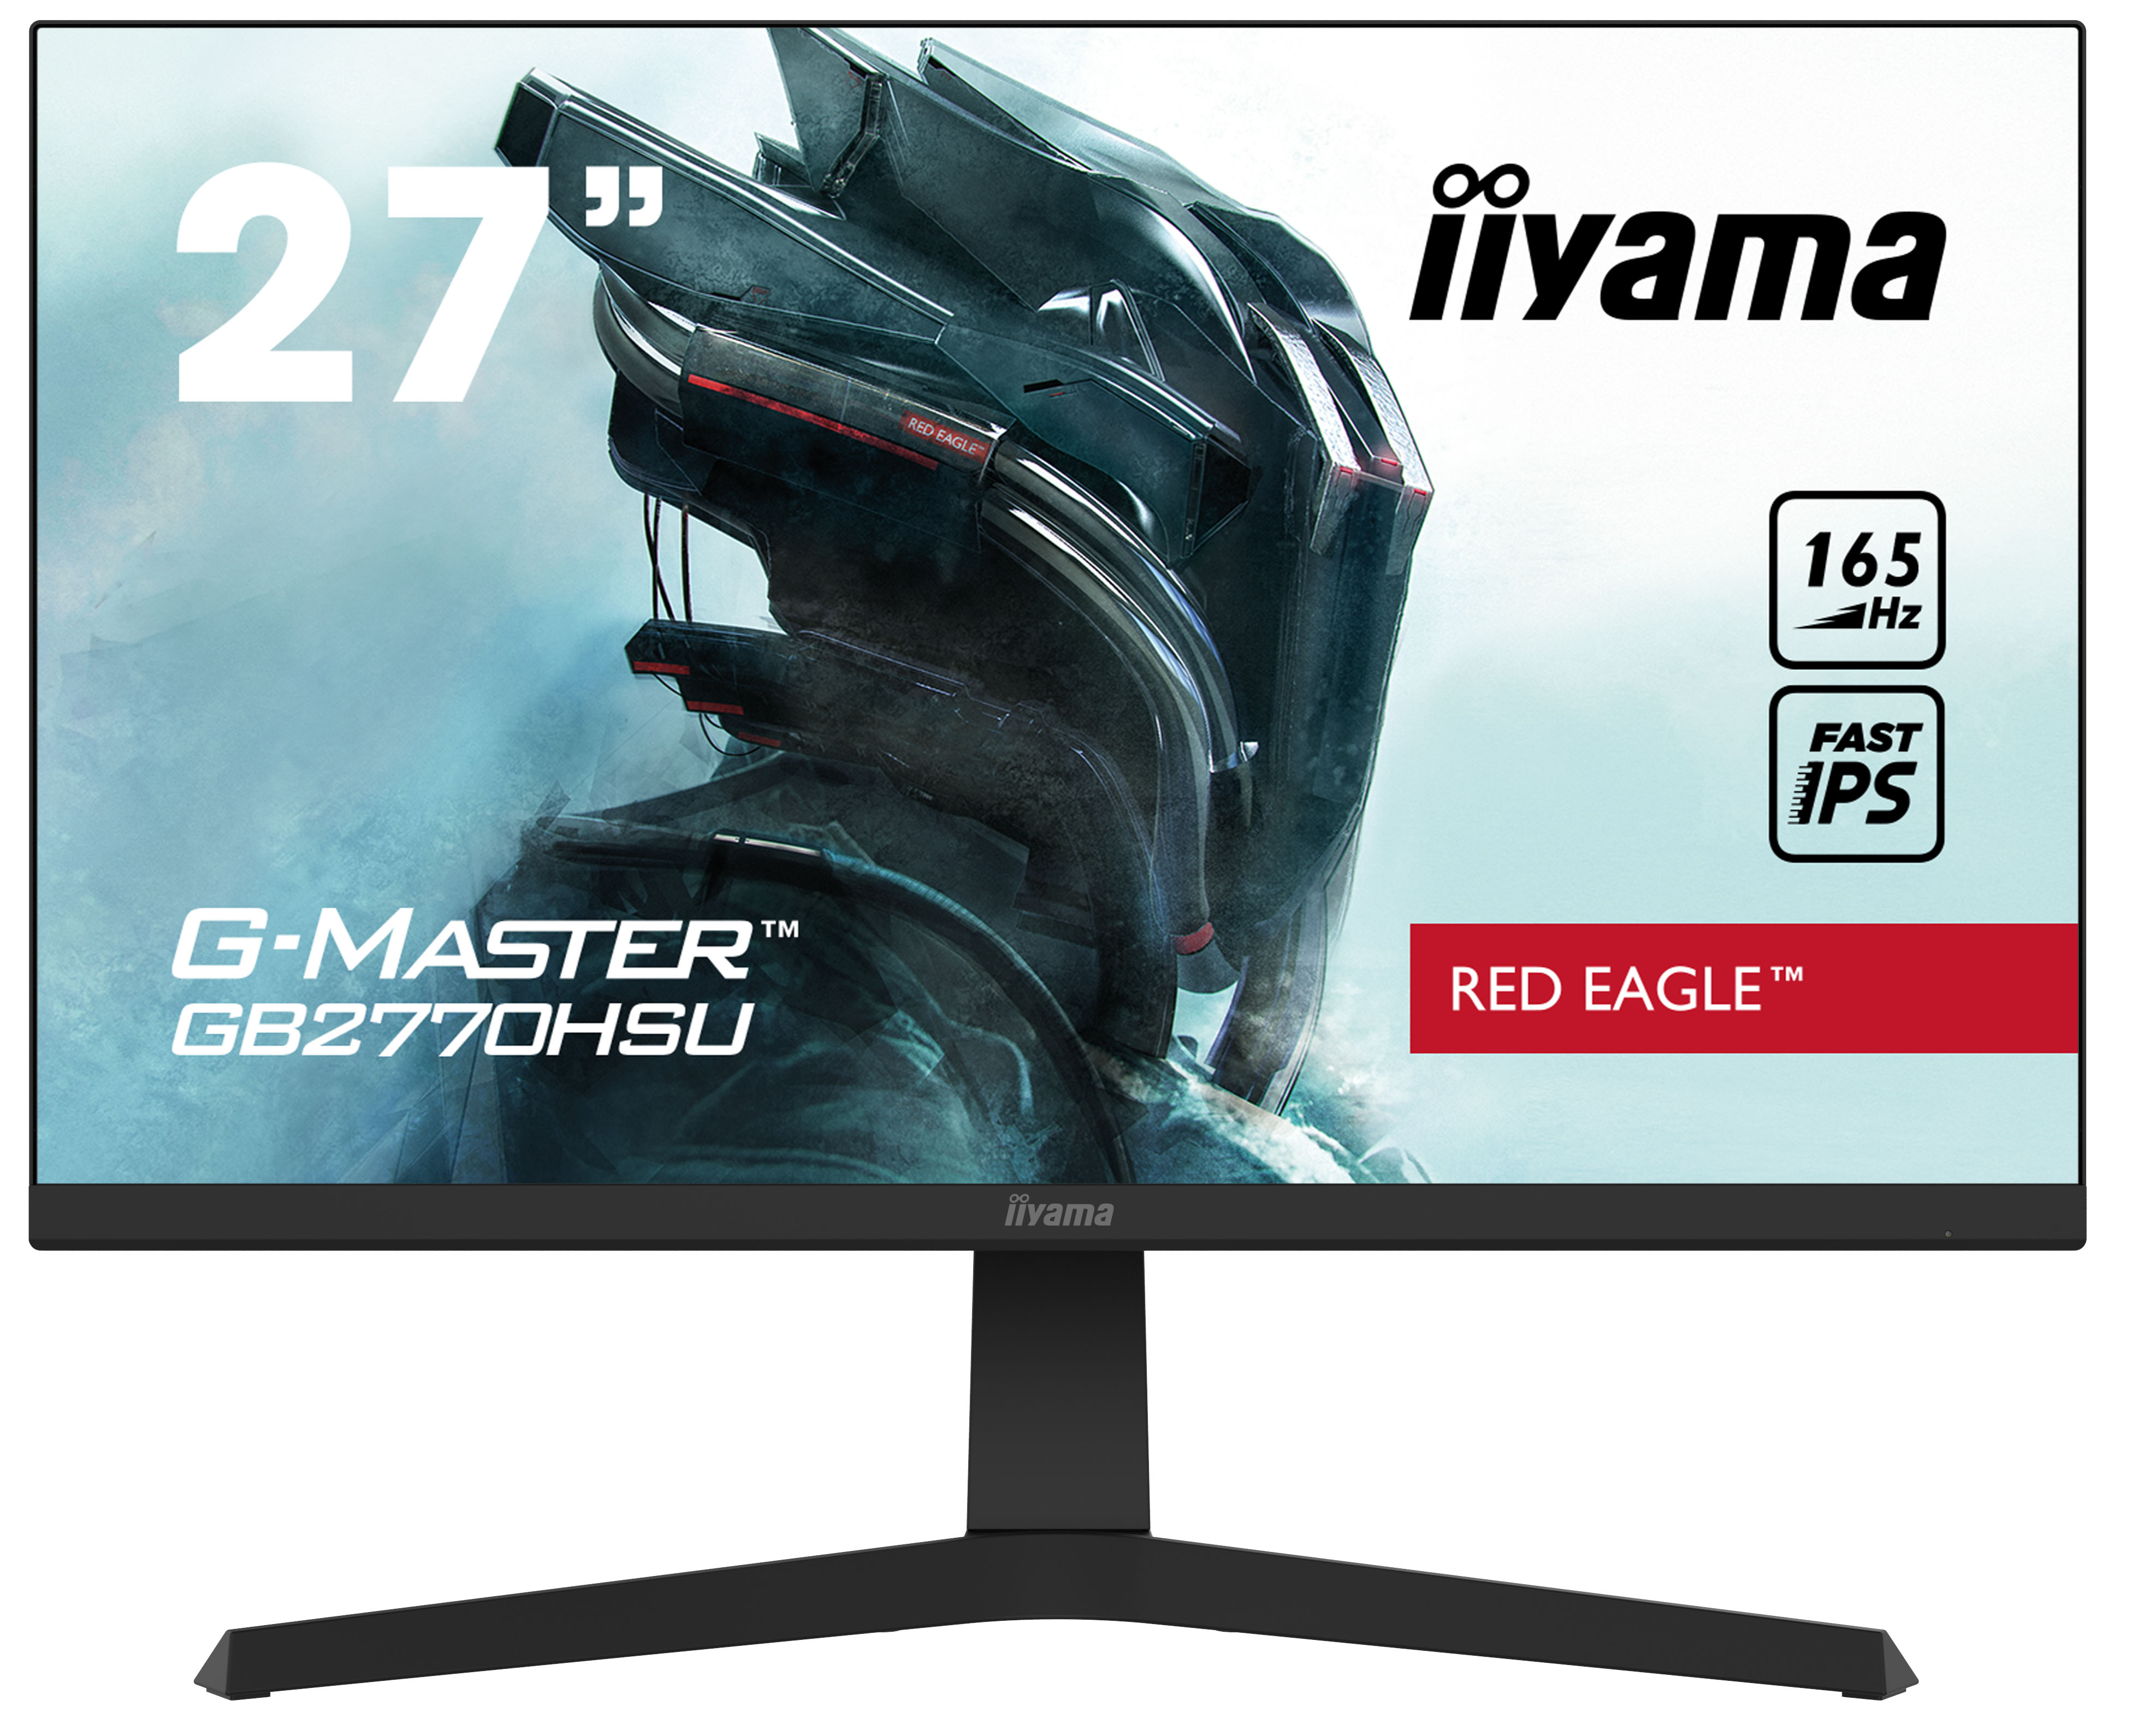 Iiyama G-MASTER GB2770HSU-B1 RED EAGLE | 27" | 1920 x 1080 @165Hz (2.1 megapixel Full HD, DisplayPort) | Gaming Monitor | Ausstellung